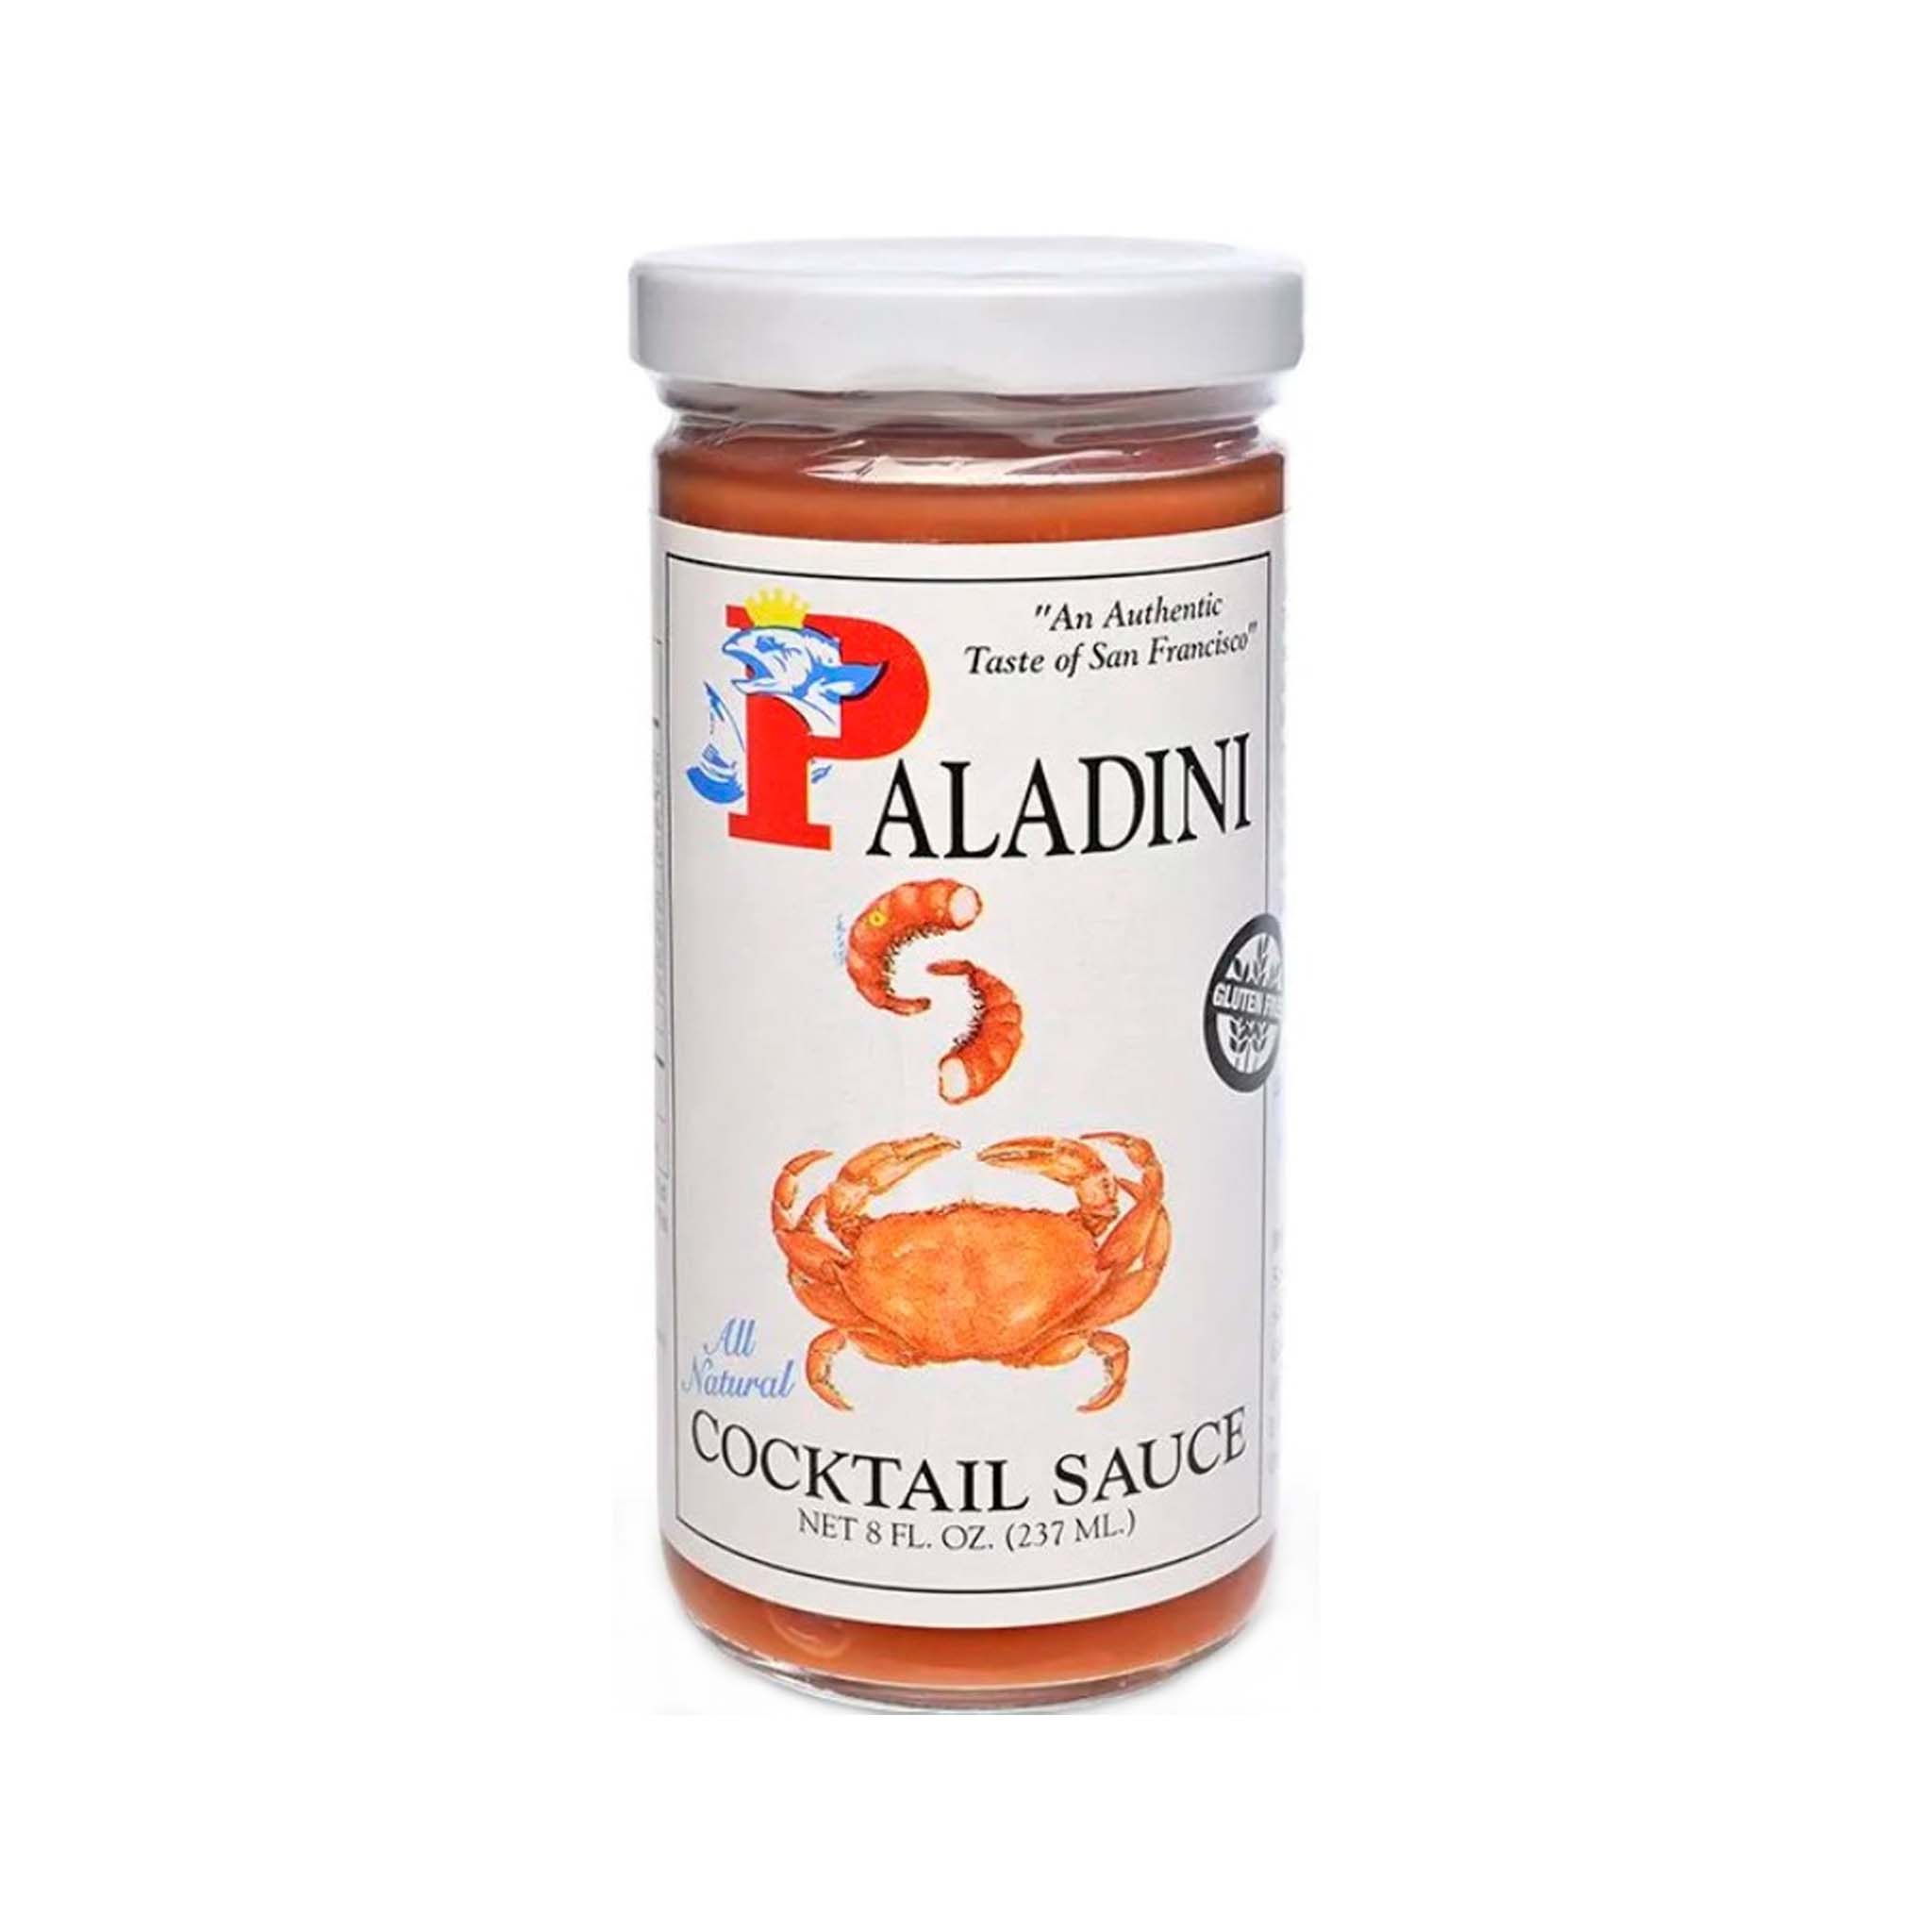 Paladini Cocktail Sauce